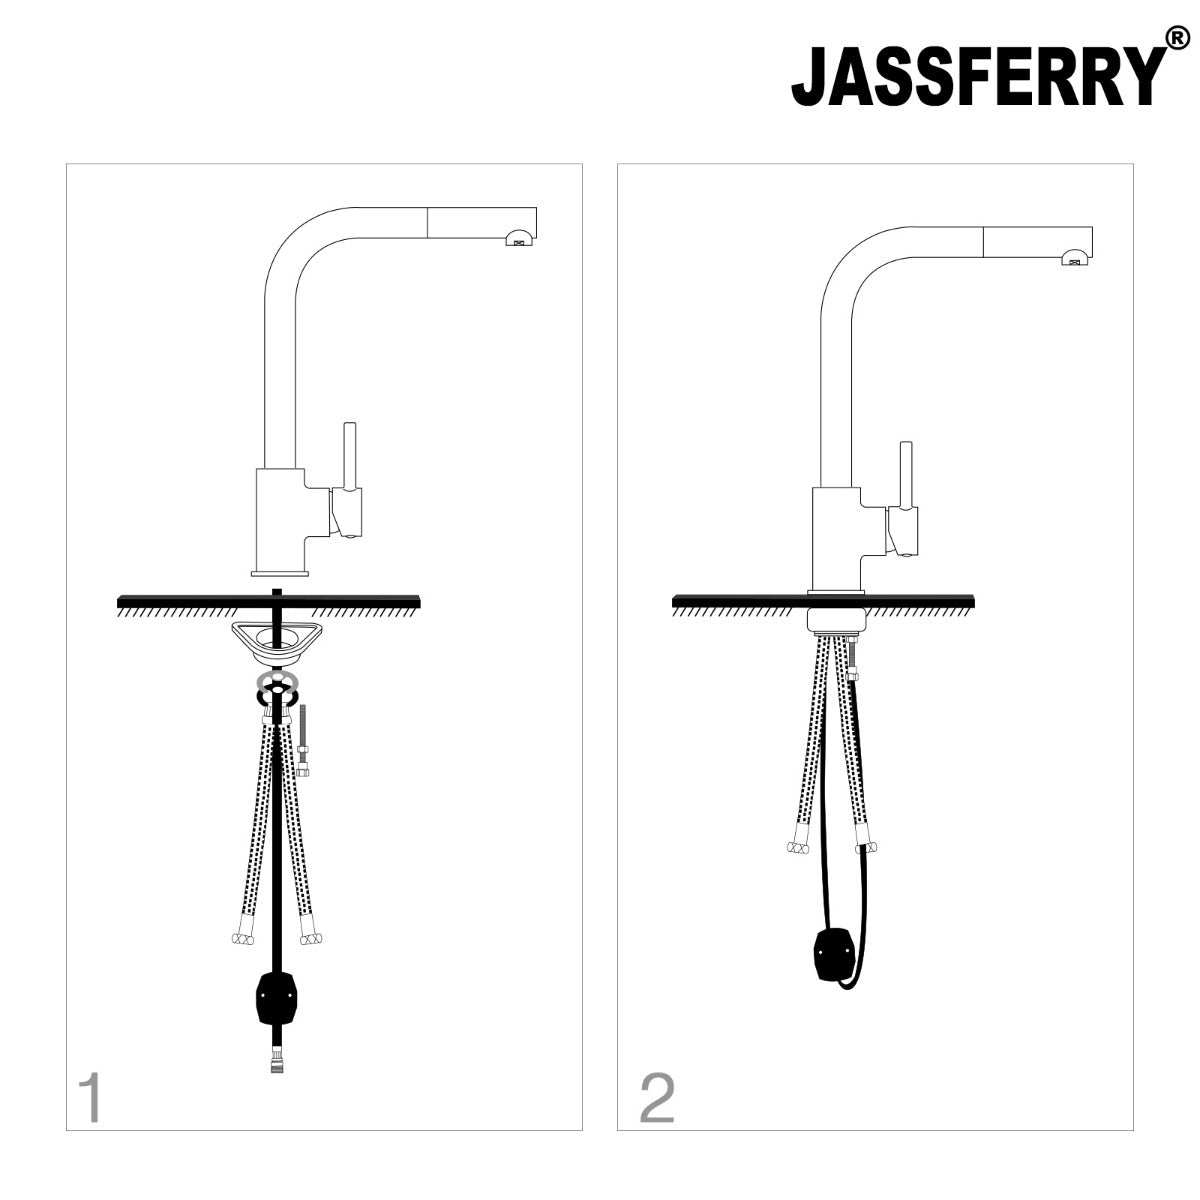 JassferryJASSFERRY Flexible Pull Out Down Hose Kitchen Mixer Tap Flexible Swivel SpoutKitchen taps